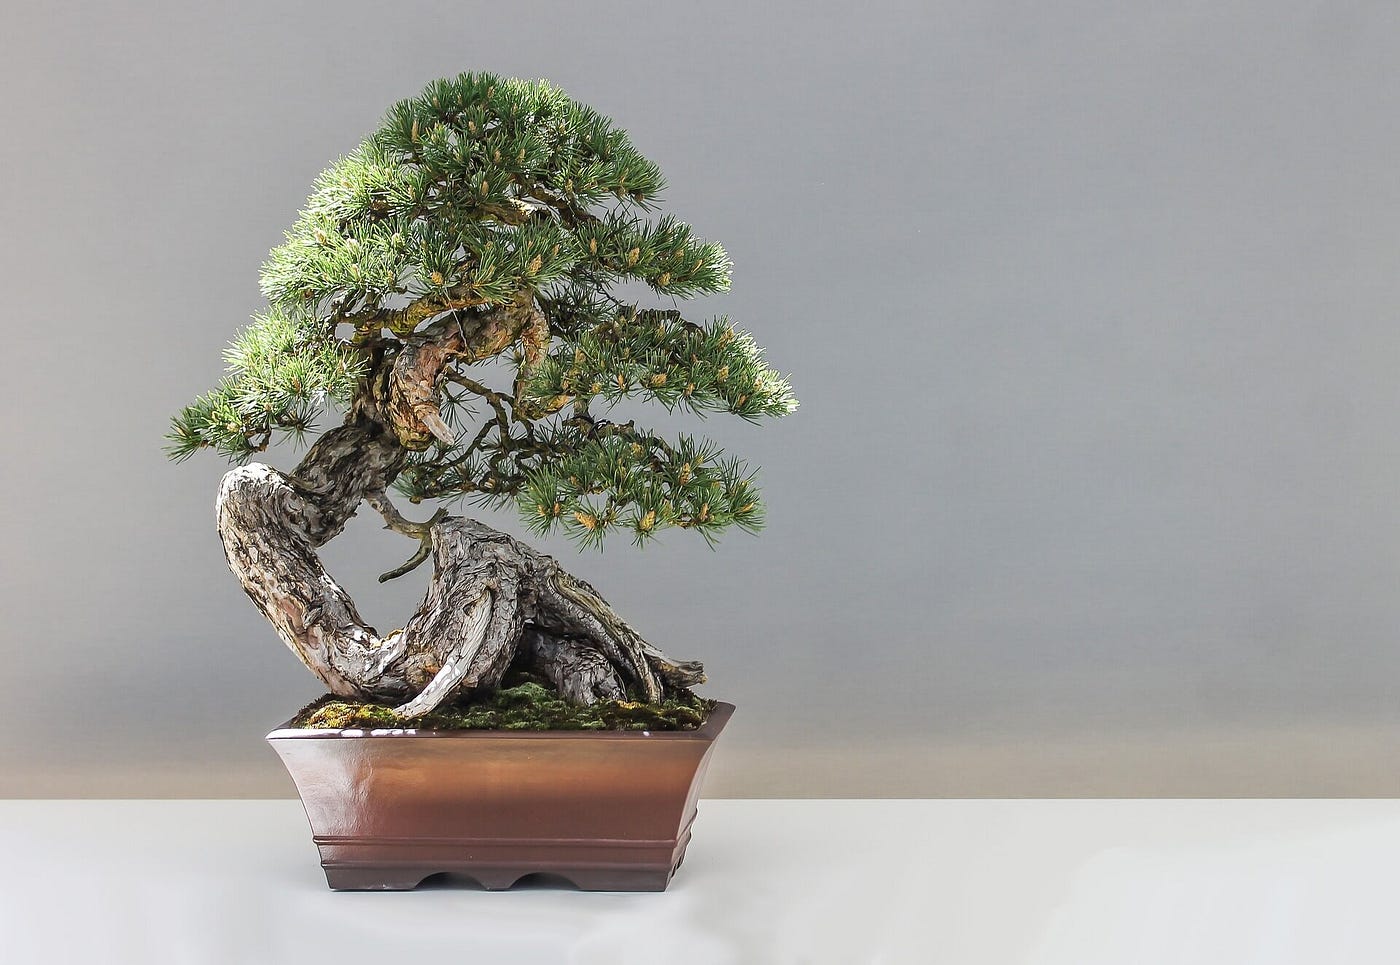 Introducing the Beauty of Bonsai Trees | by Tangela Harper | Medium